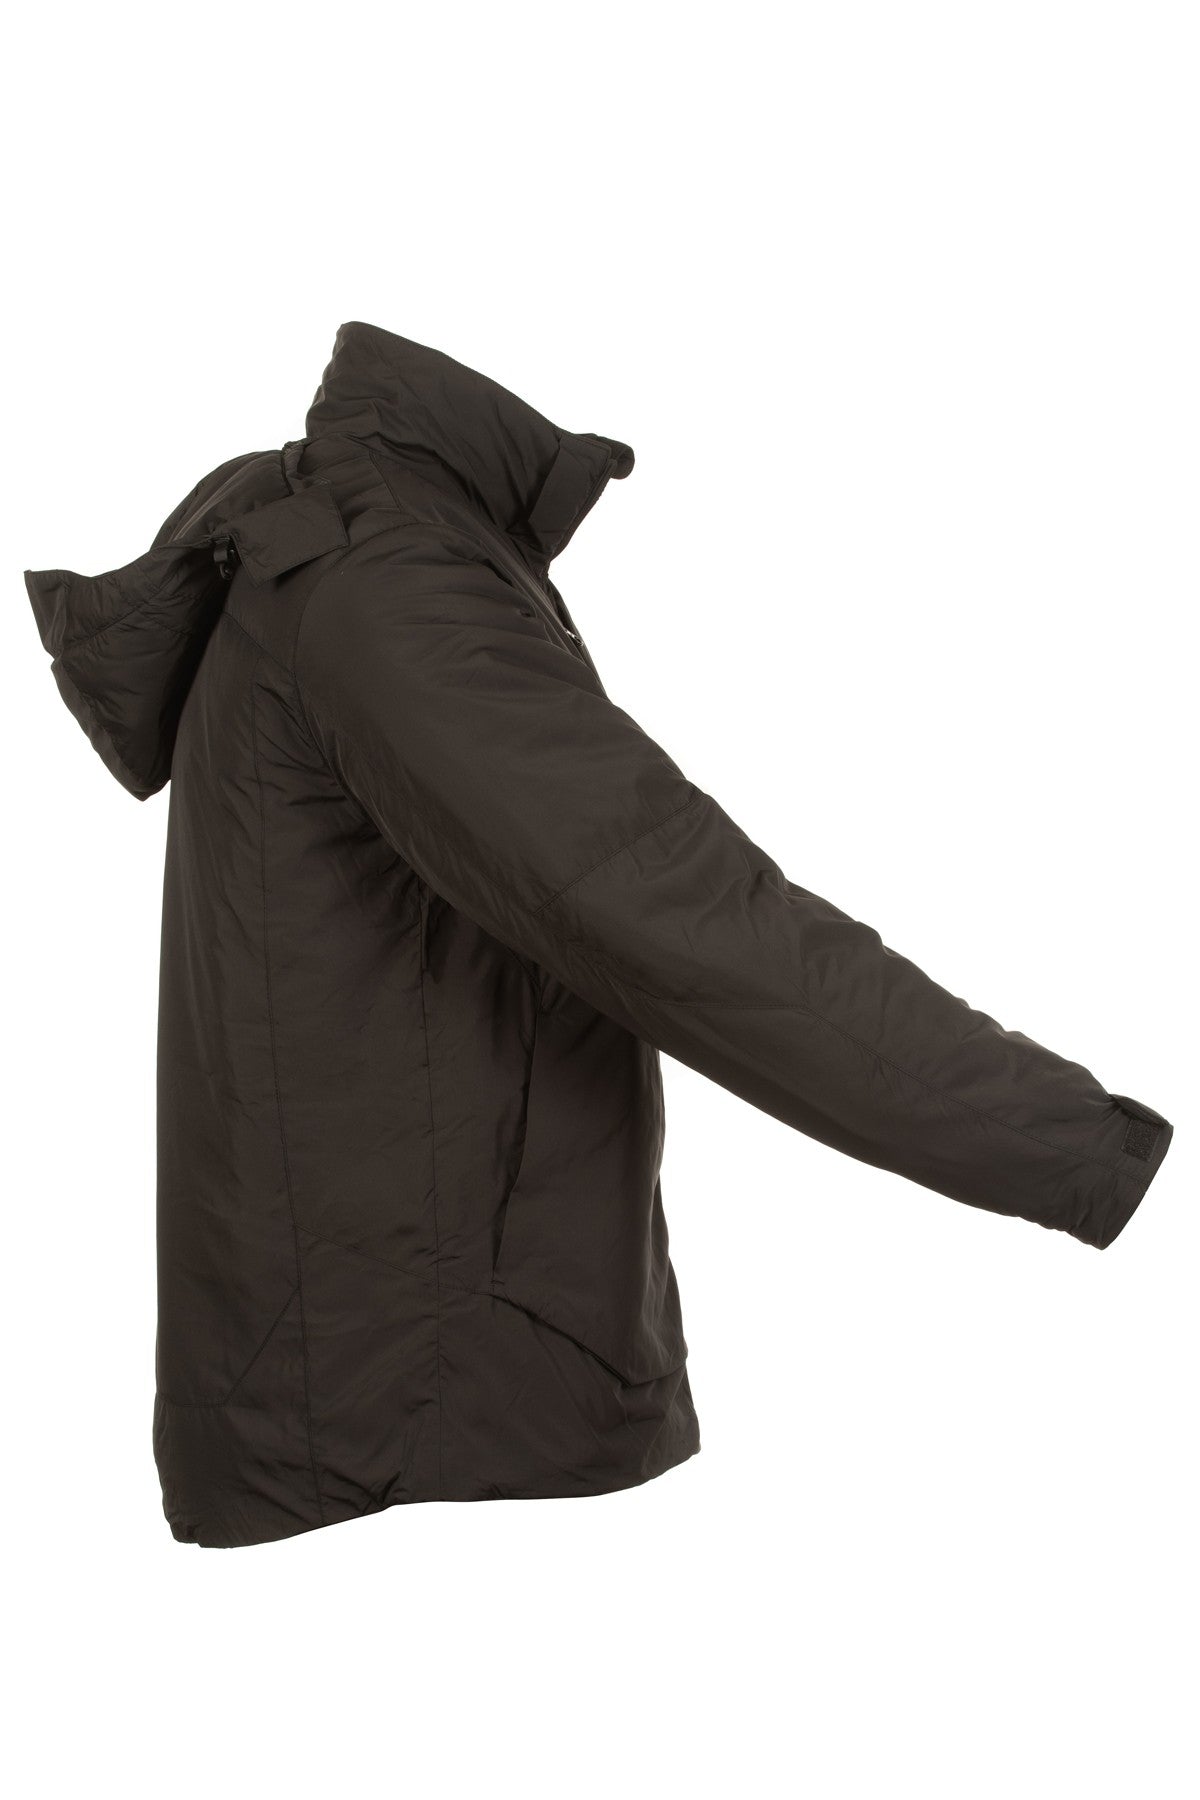 Snugpak Arrowhead - Mid-Weight Insulated Jacket